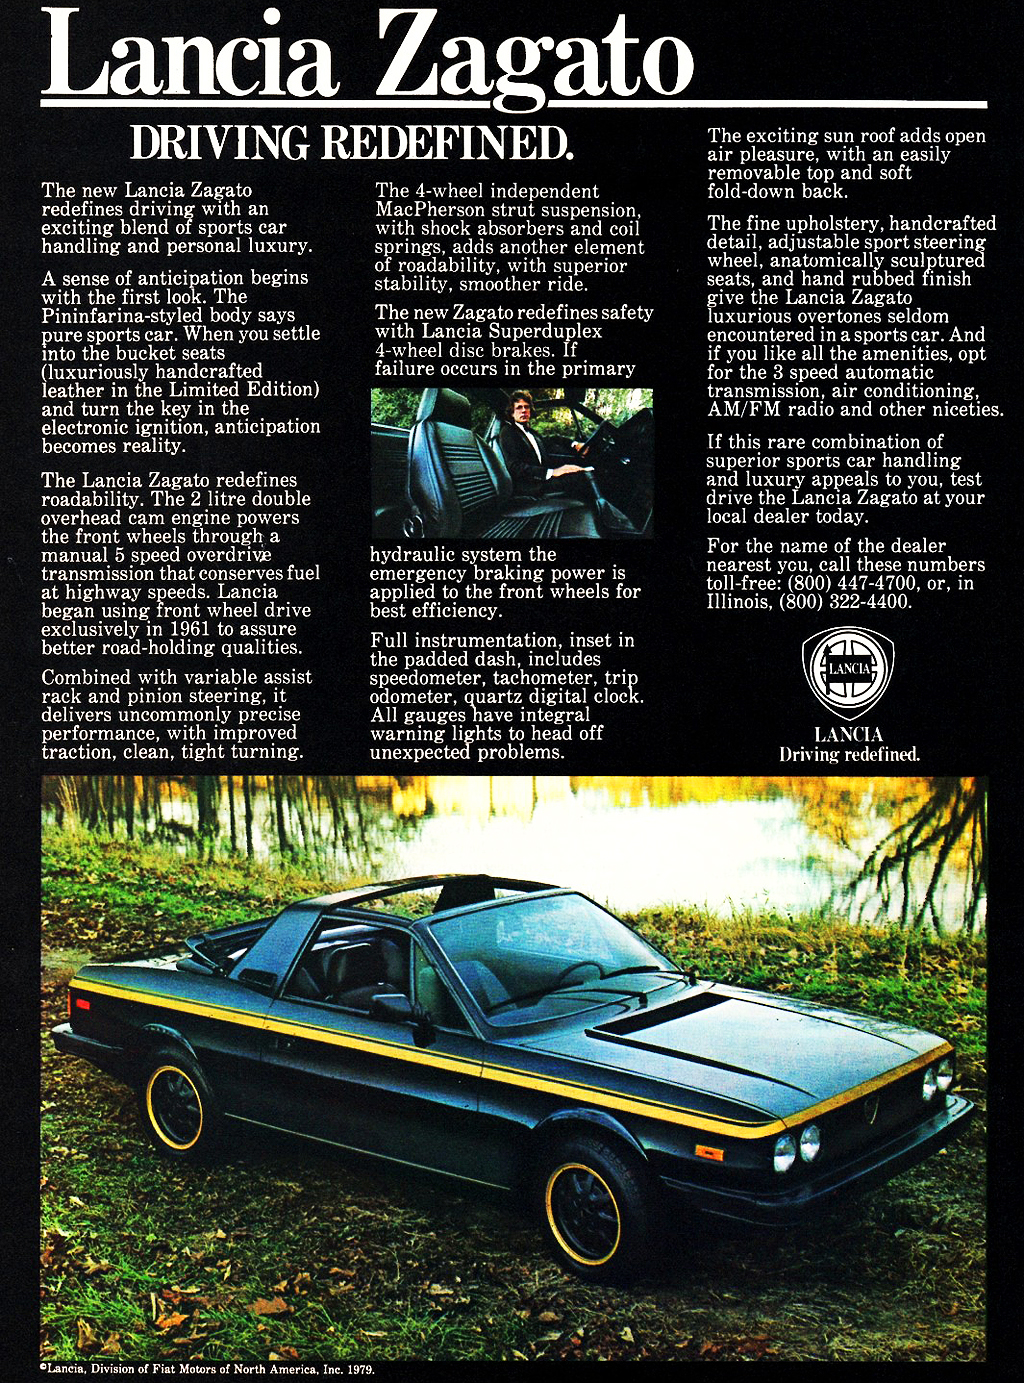 1979 American Auto Advertising